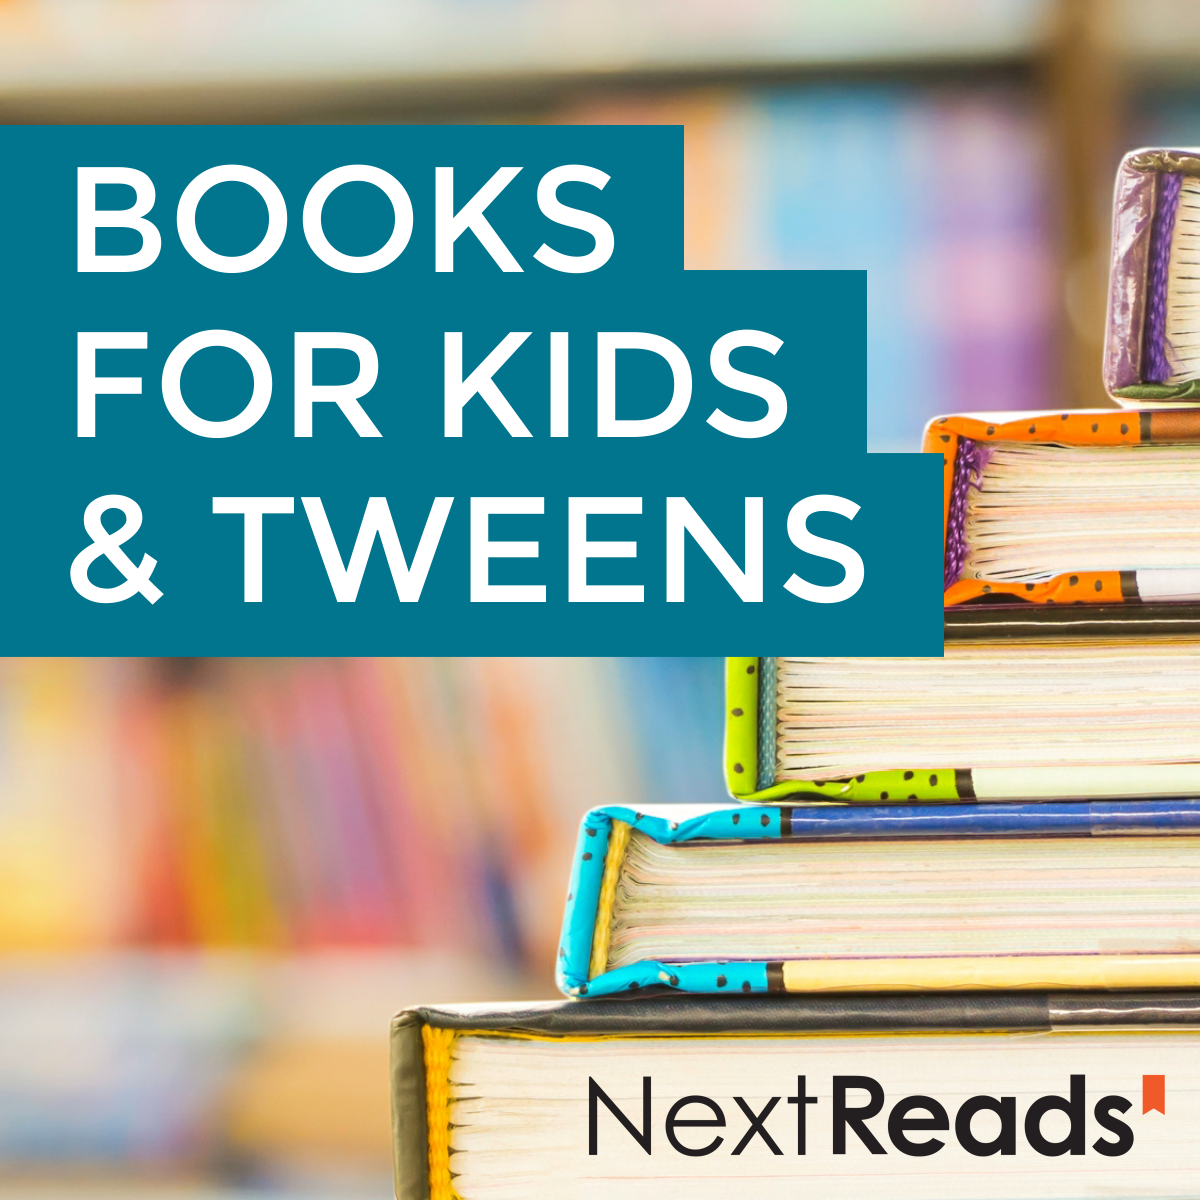 Books for Kids & Tweens